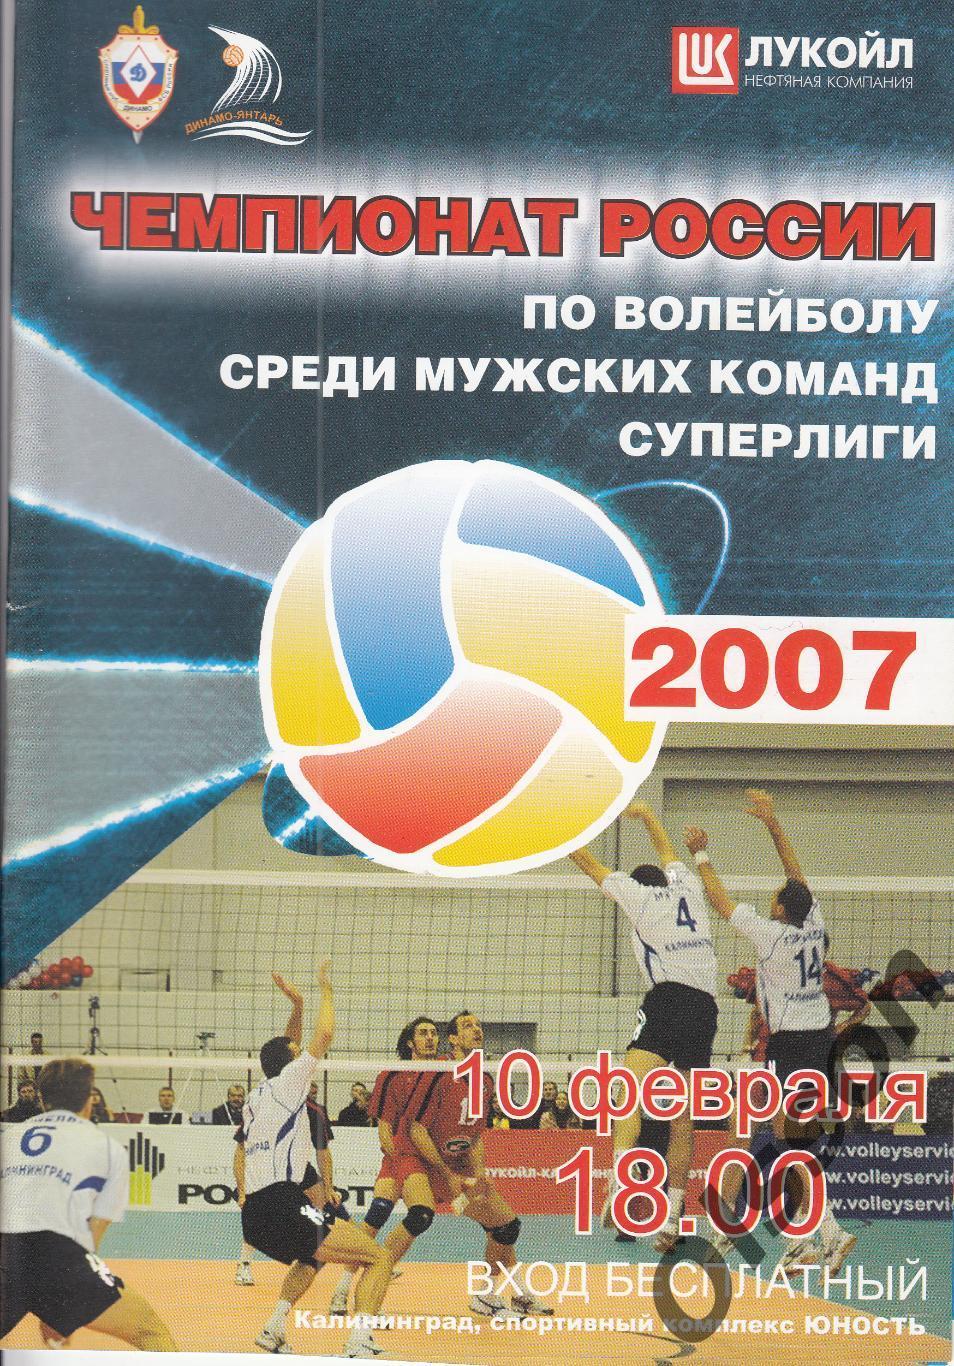 Динамо-Янтарь Калининград - Прикамье Пермь 10.02.2007